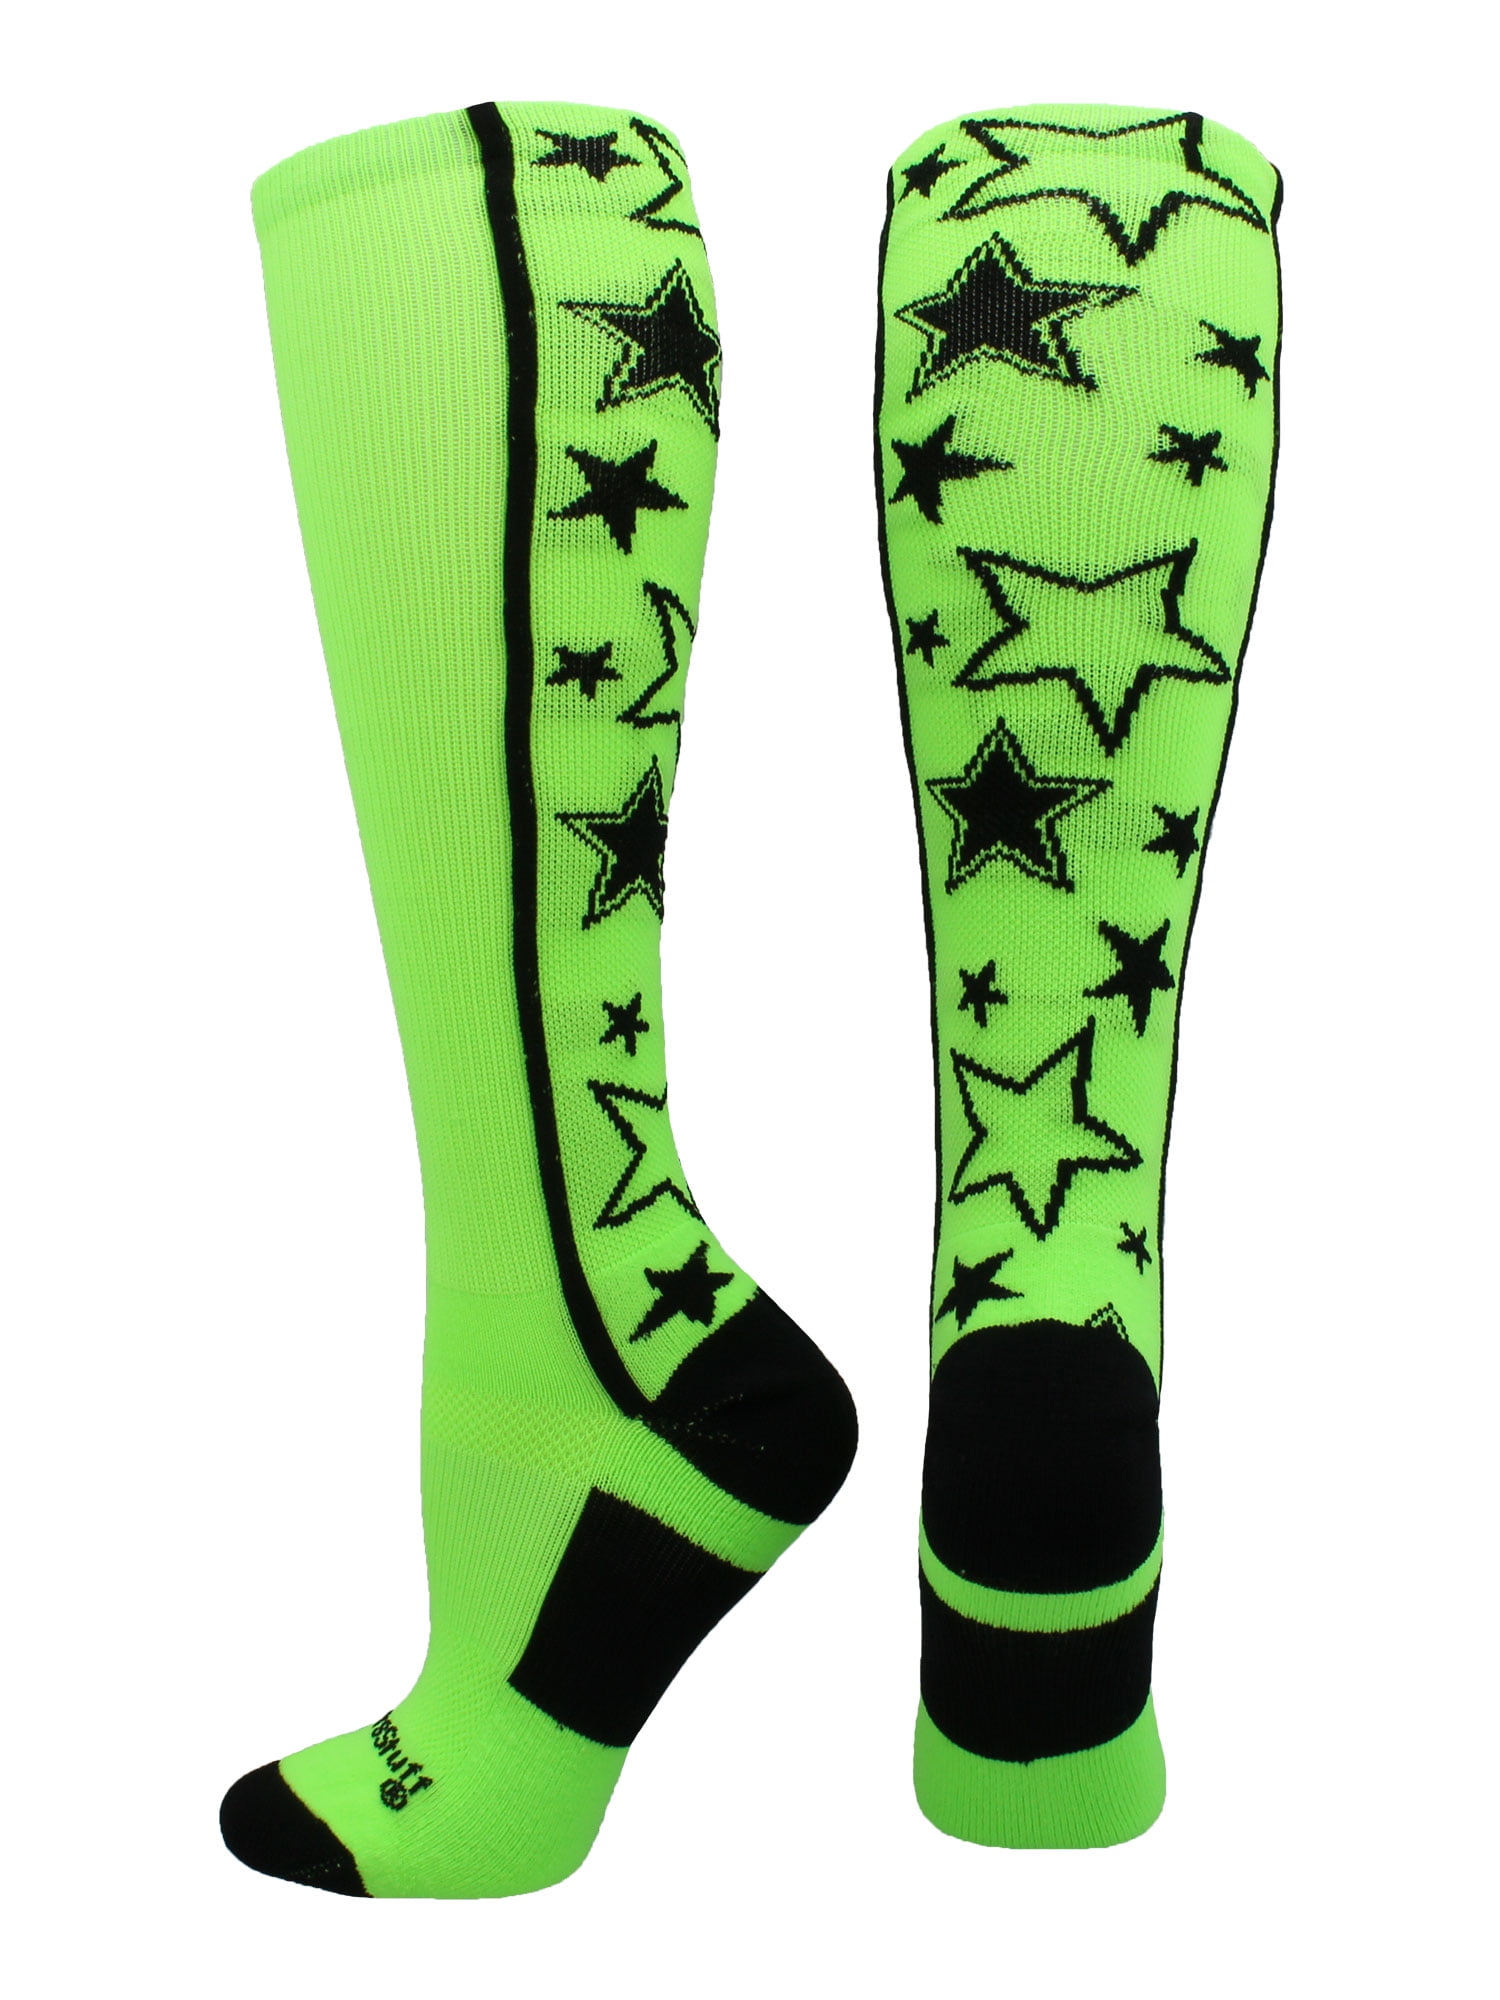 Crazy Socks with Stars Over the Calf Socks (Neon Green/Black, Medium ...